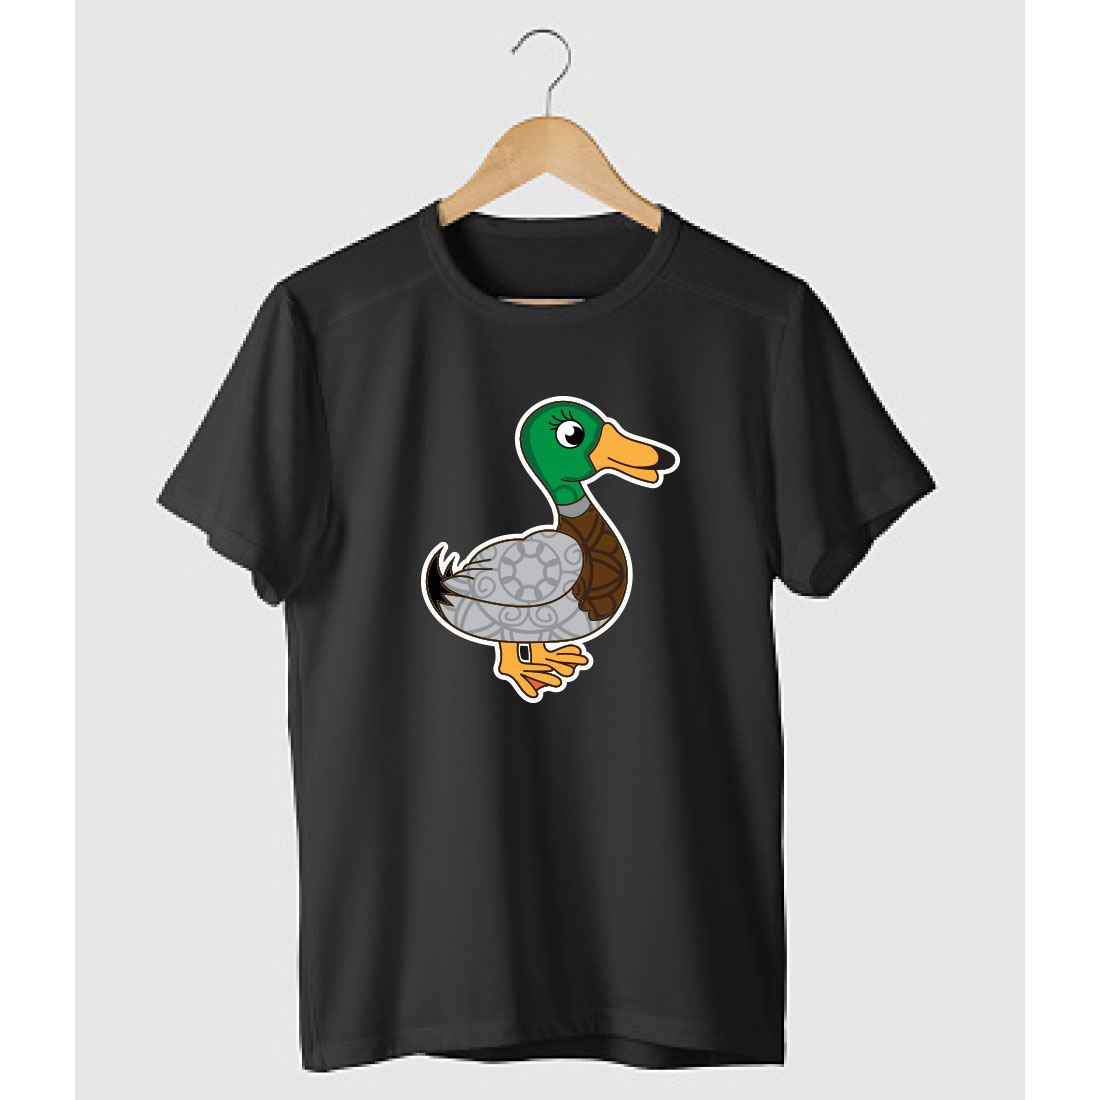 Rubber Duck SVG T-Shirt Designs – MasterBundles